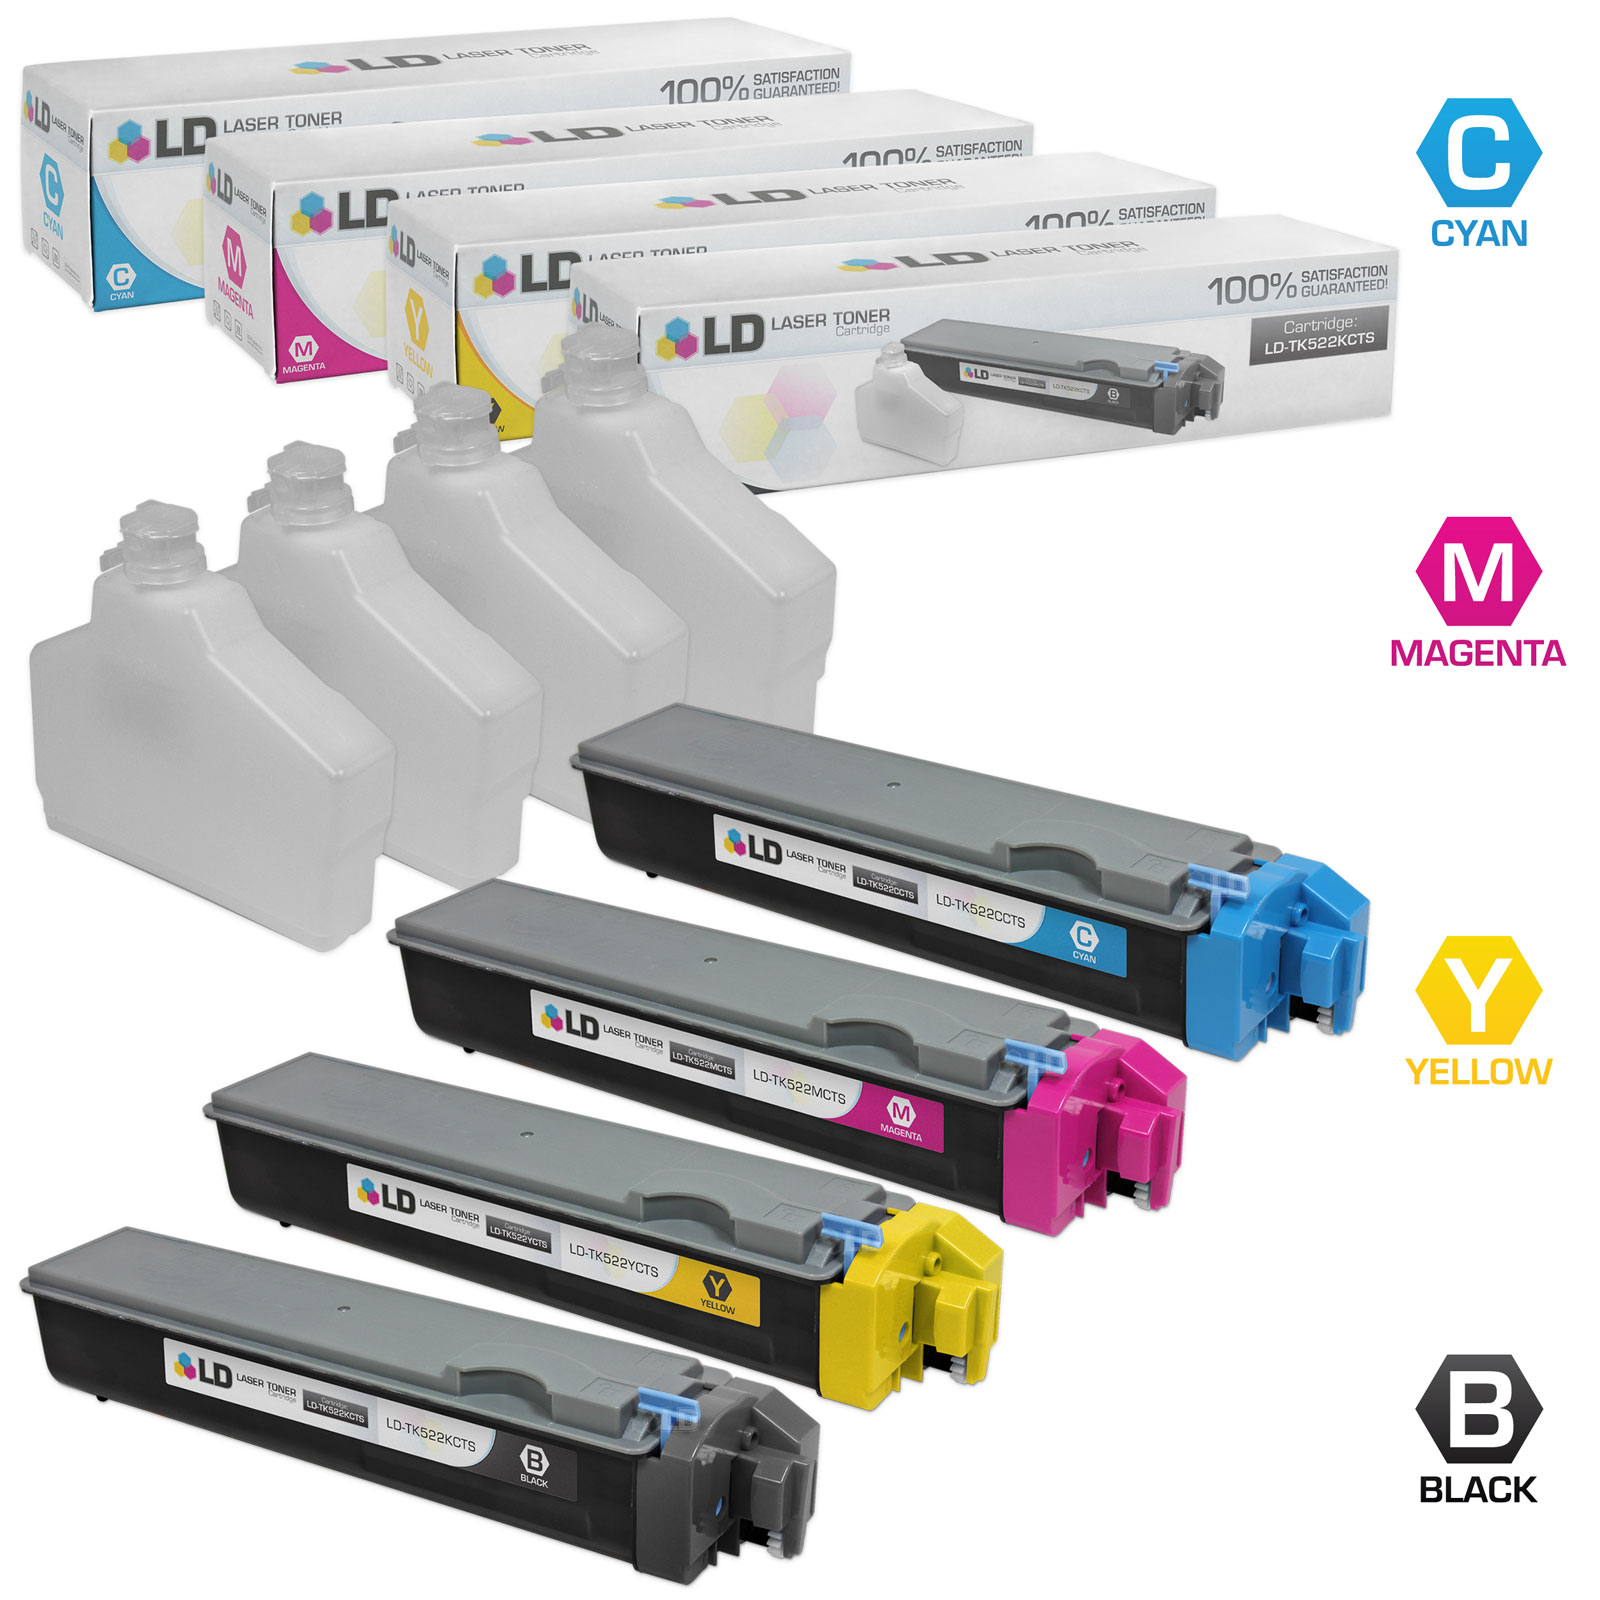 LD Compatible Replacements for Kyocera-Mita 4PK TK-522 Laser Toner Cartridges Includes: 1 TK-522K Black, 1 TK-522C Cyan, 1 TK-522M Magenta, & 1 TK-522Y Yellow for use in Kyocera-Mita FS-C5015N - image 1 of 1